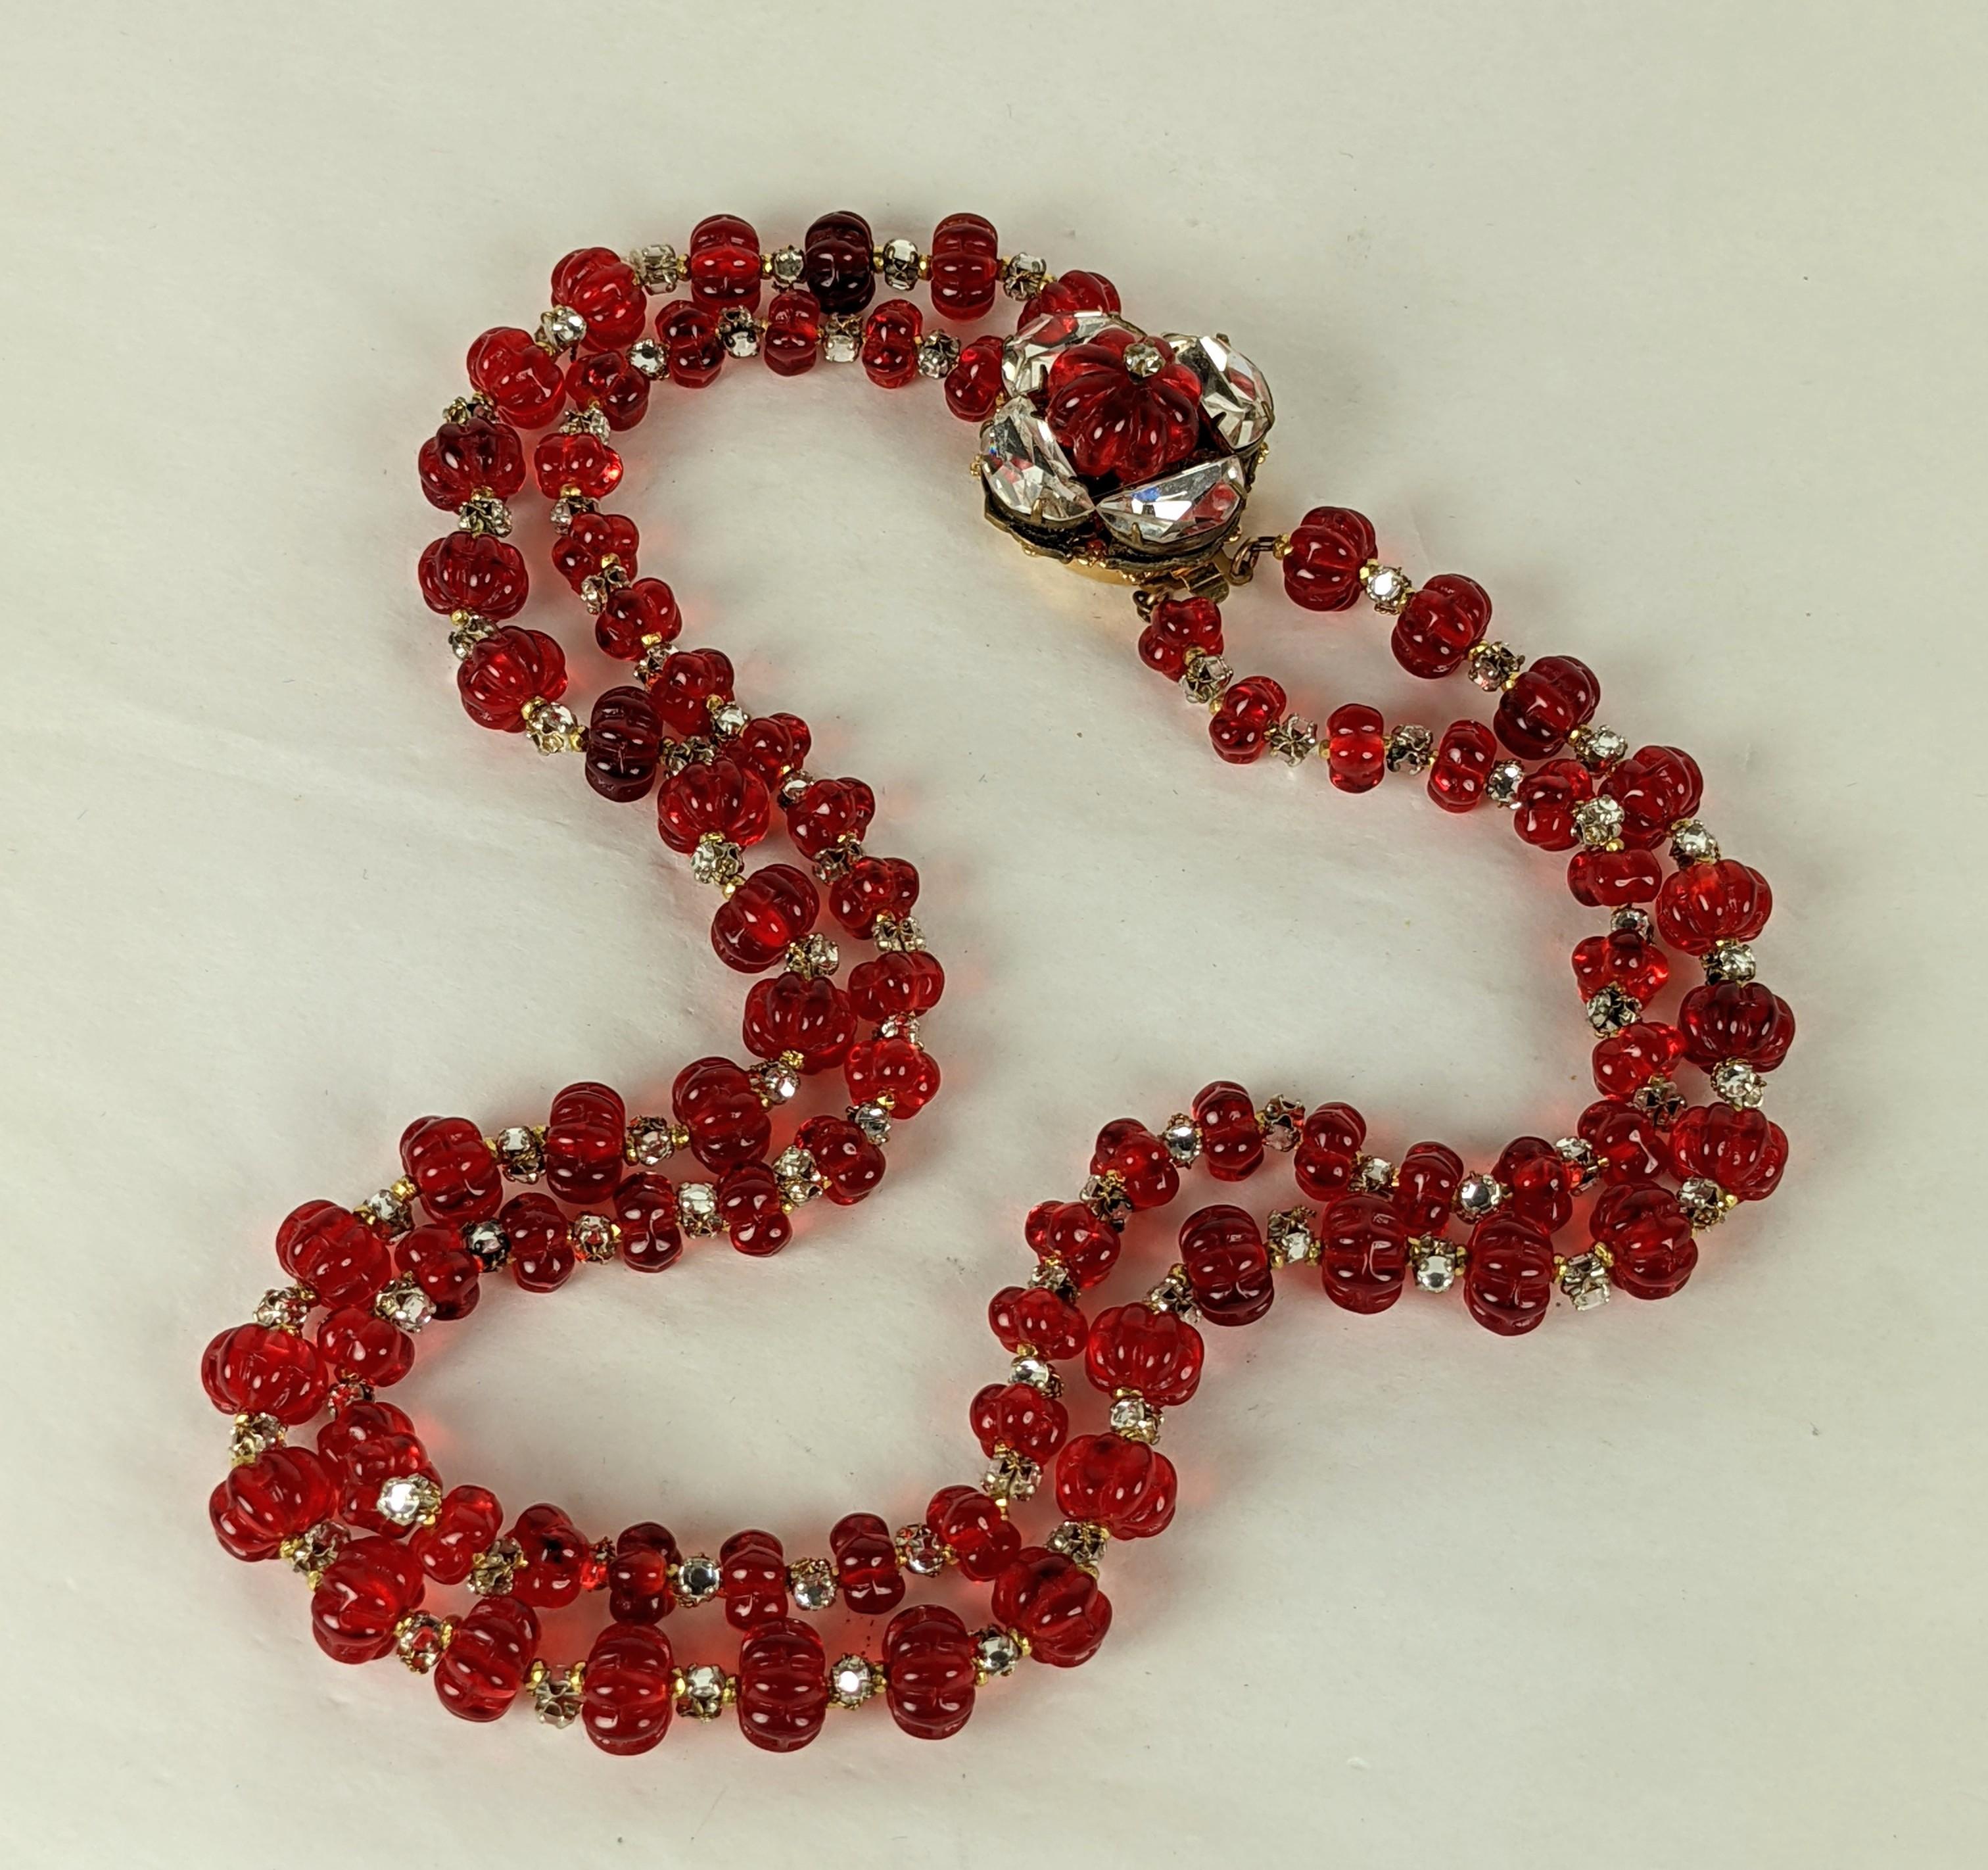 Anglo-indien Miriam Haskell Collier de perles en verre Melon Gripoix en rubis et rubis en vente